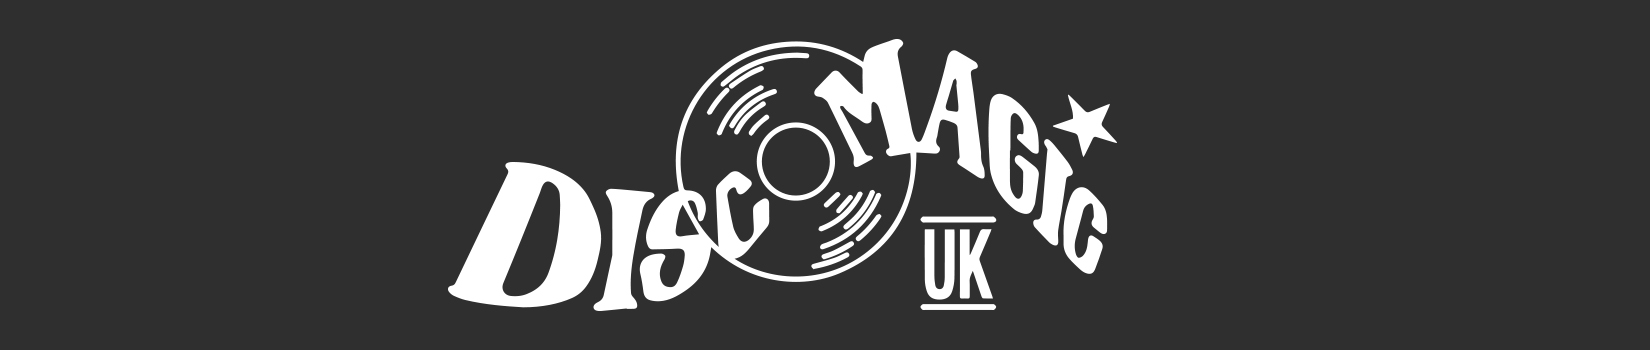 Disco Magic UK Slip Mats